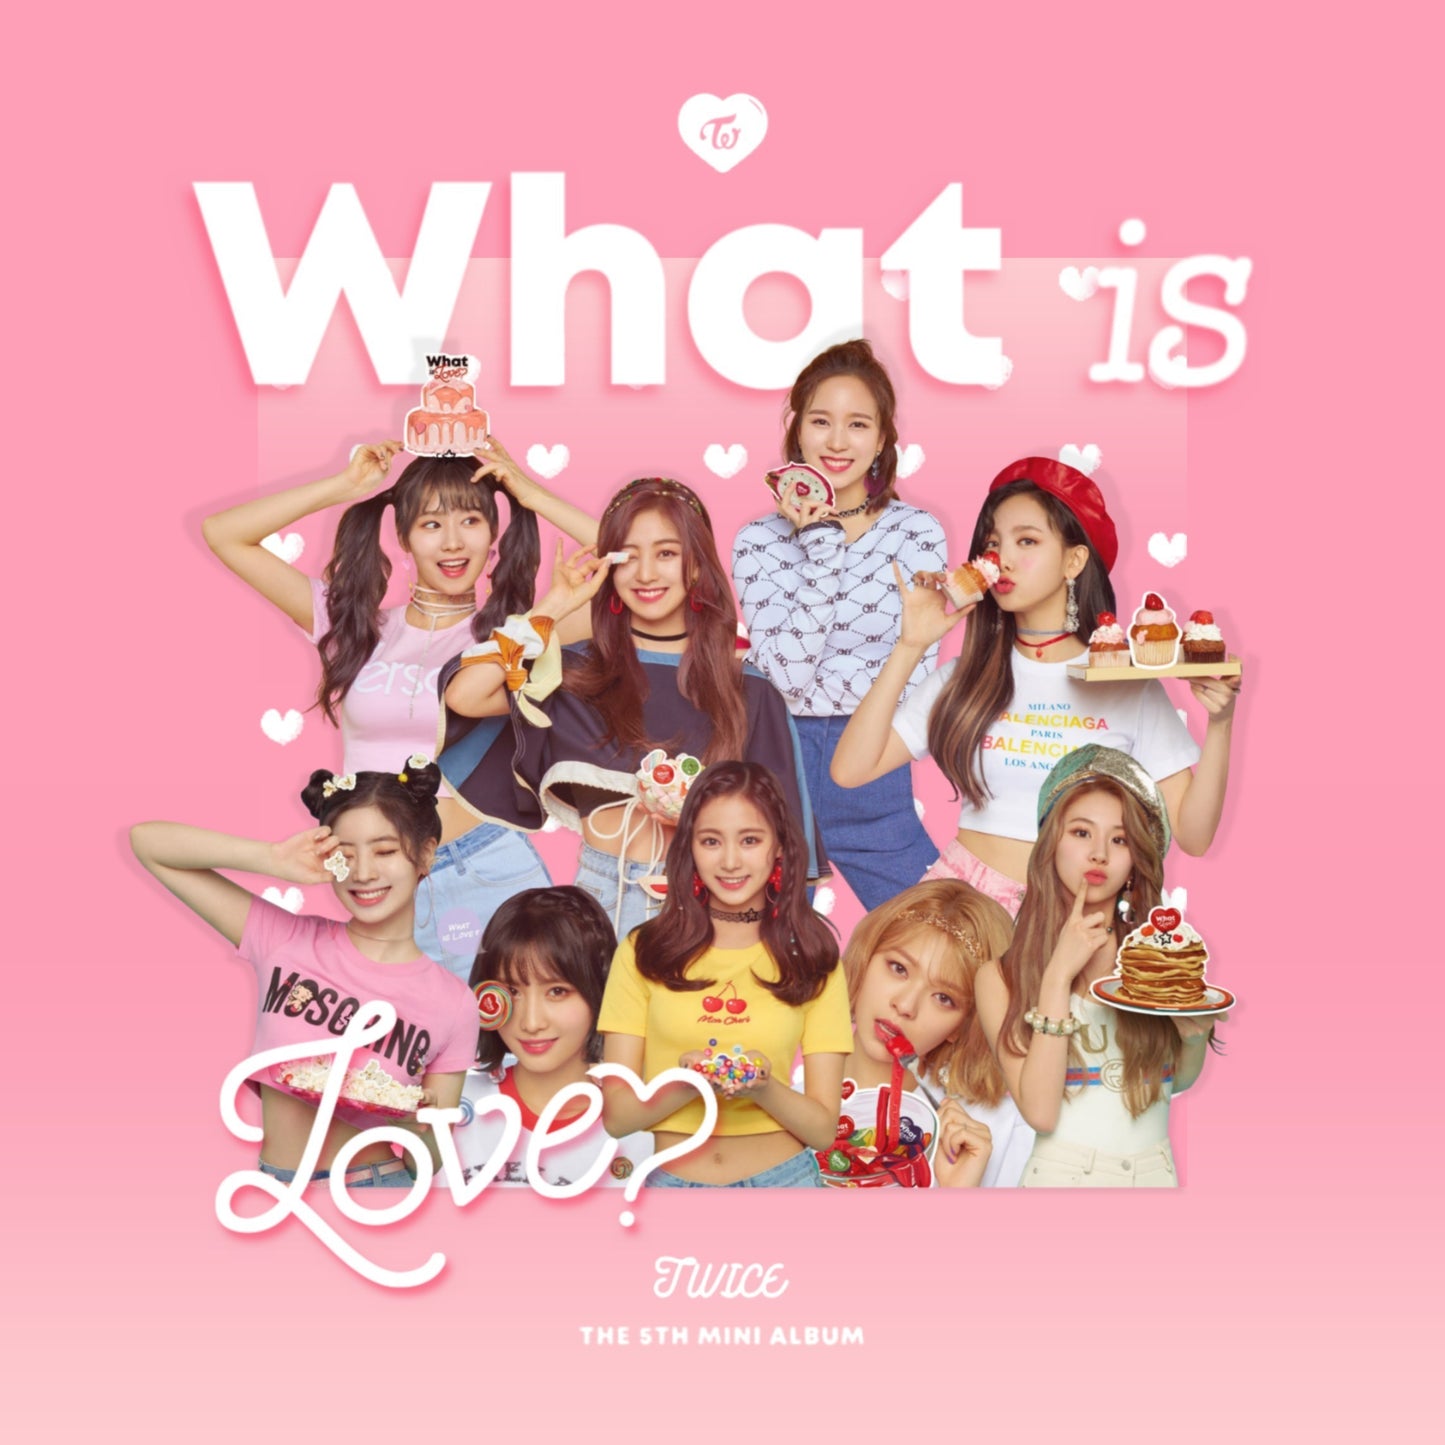 سيت البوم توايس عدد اثنين مع هدايا الطلب المسبق | (SET) Twice - What Is Love 5th Mini Album with pre order gifts